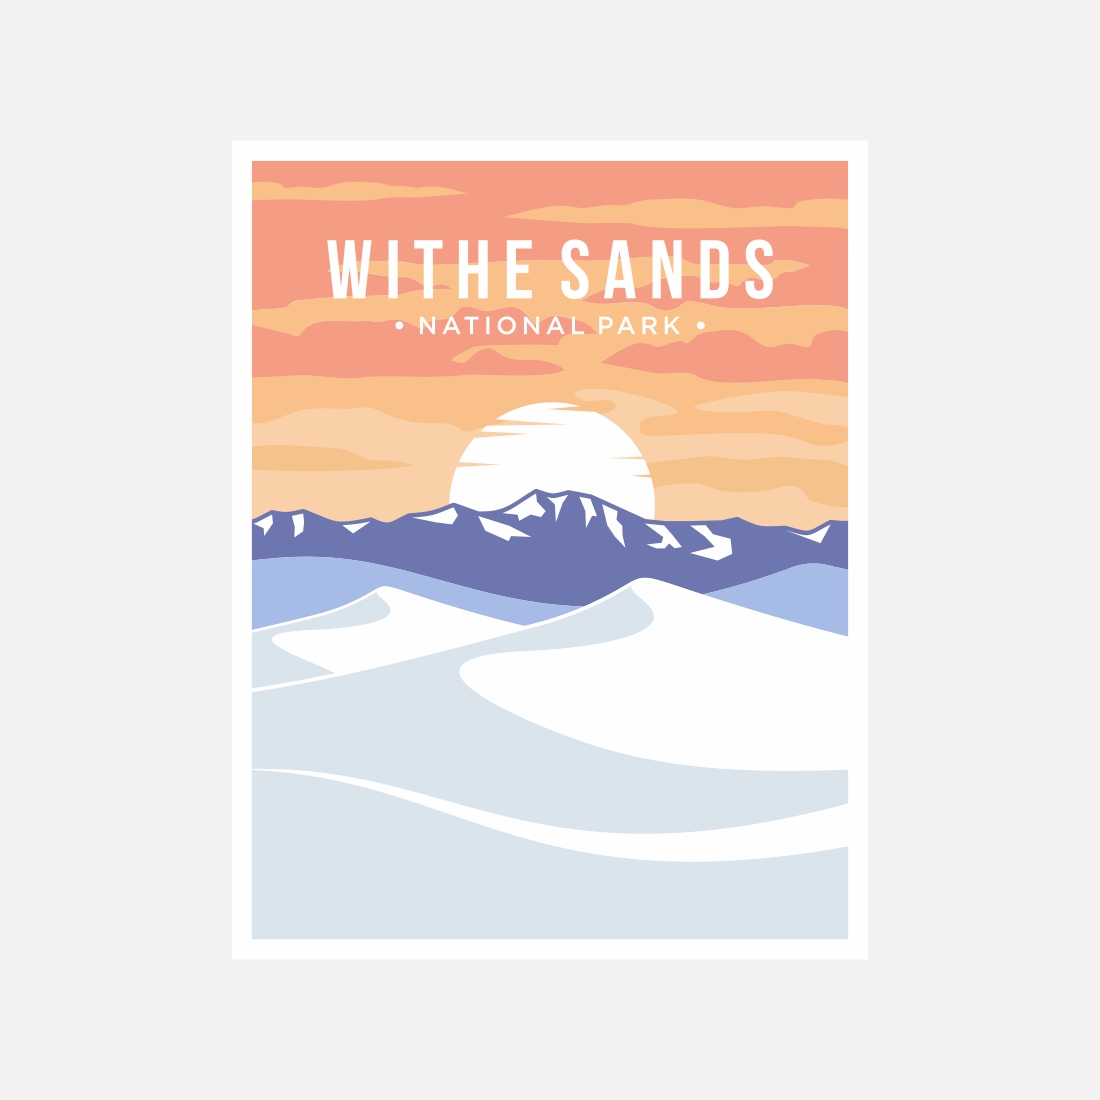 White Sand National Park poster vector illustration design – Only $8 cover image.